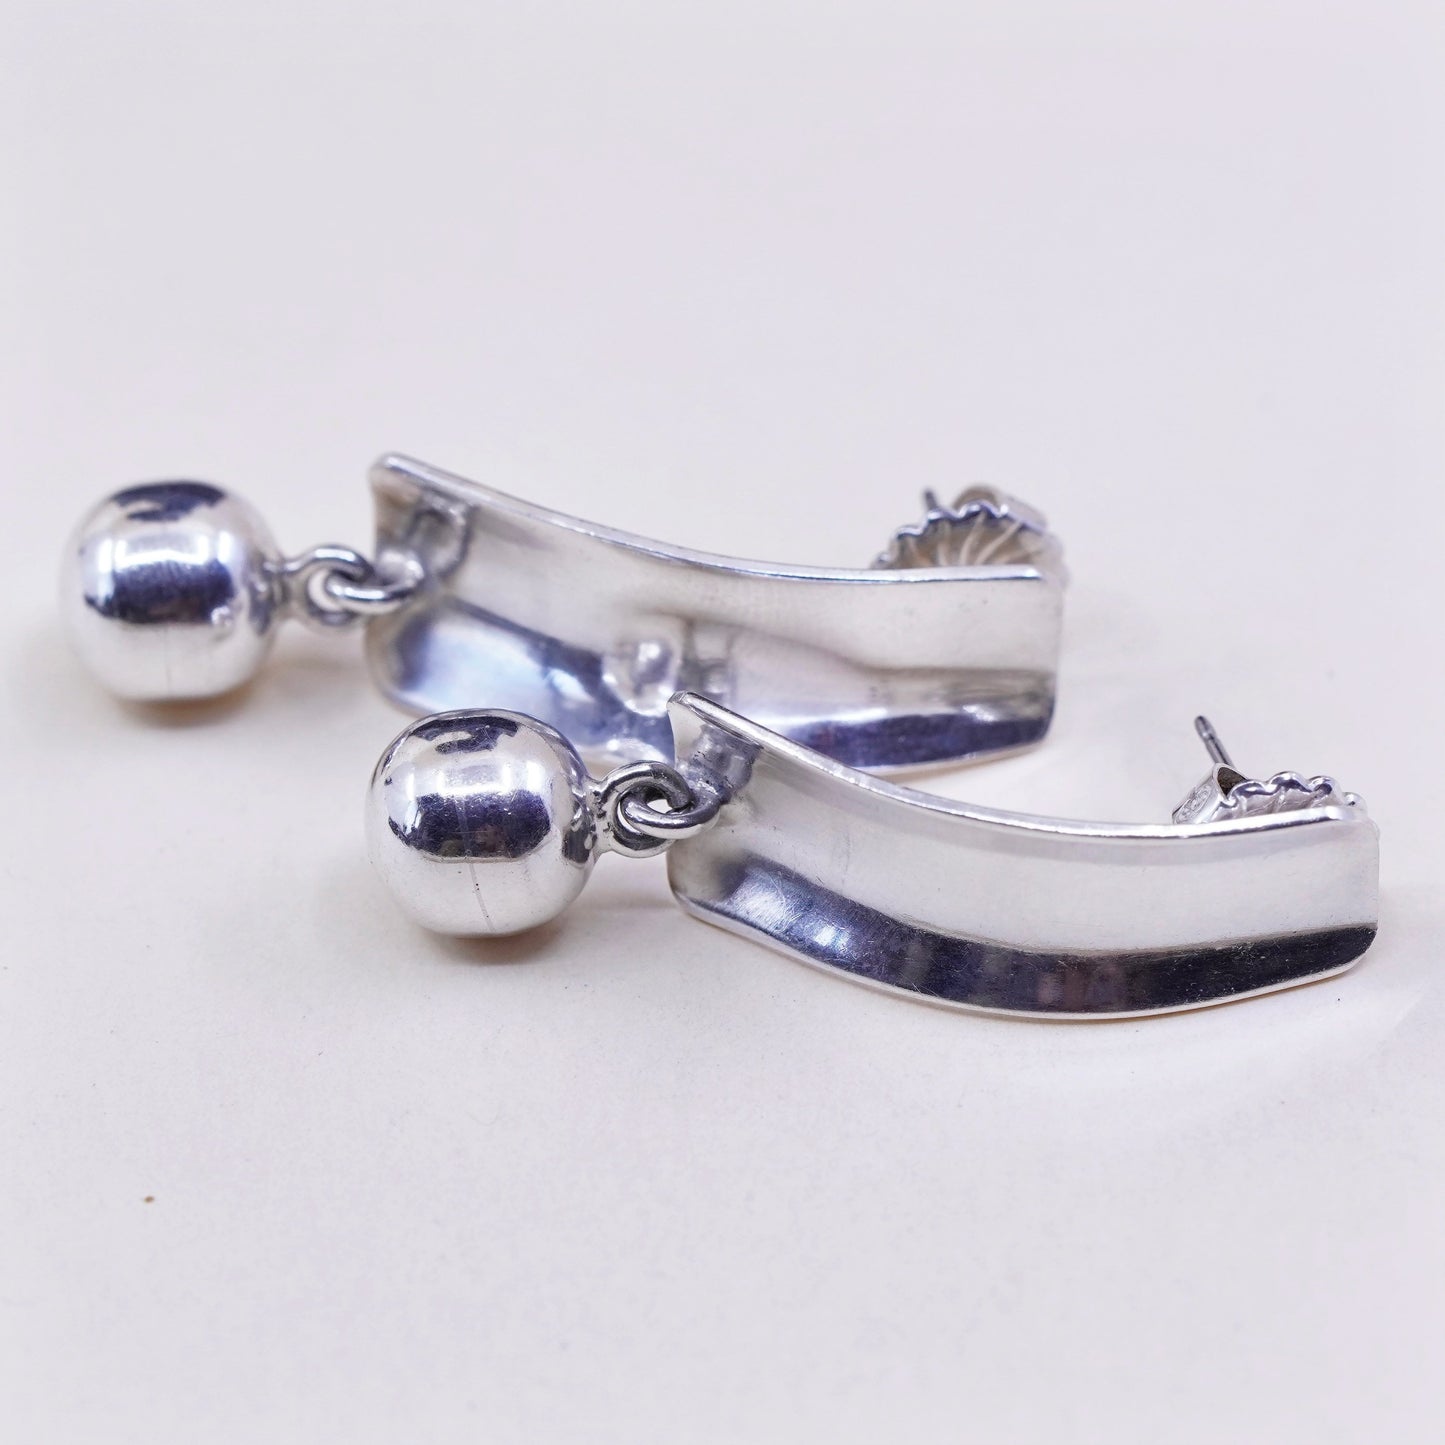 Vintage mexico sterling silver handmade earrings, 925 modern studs w/ beads